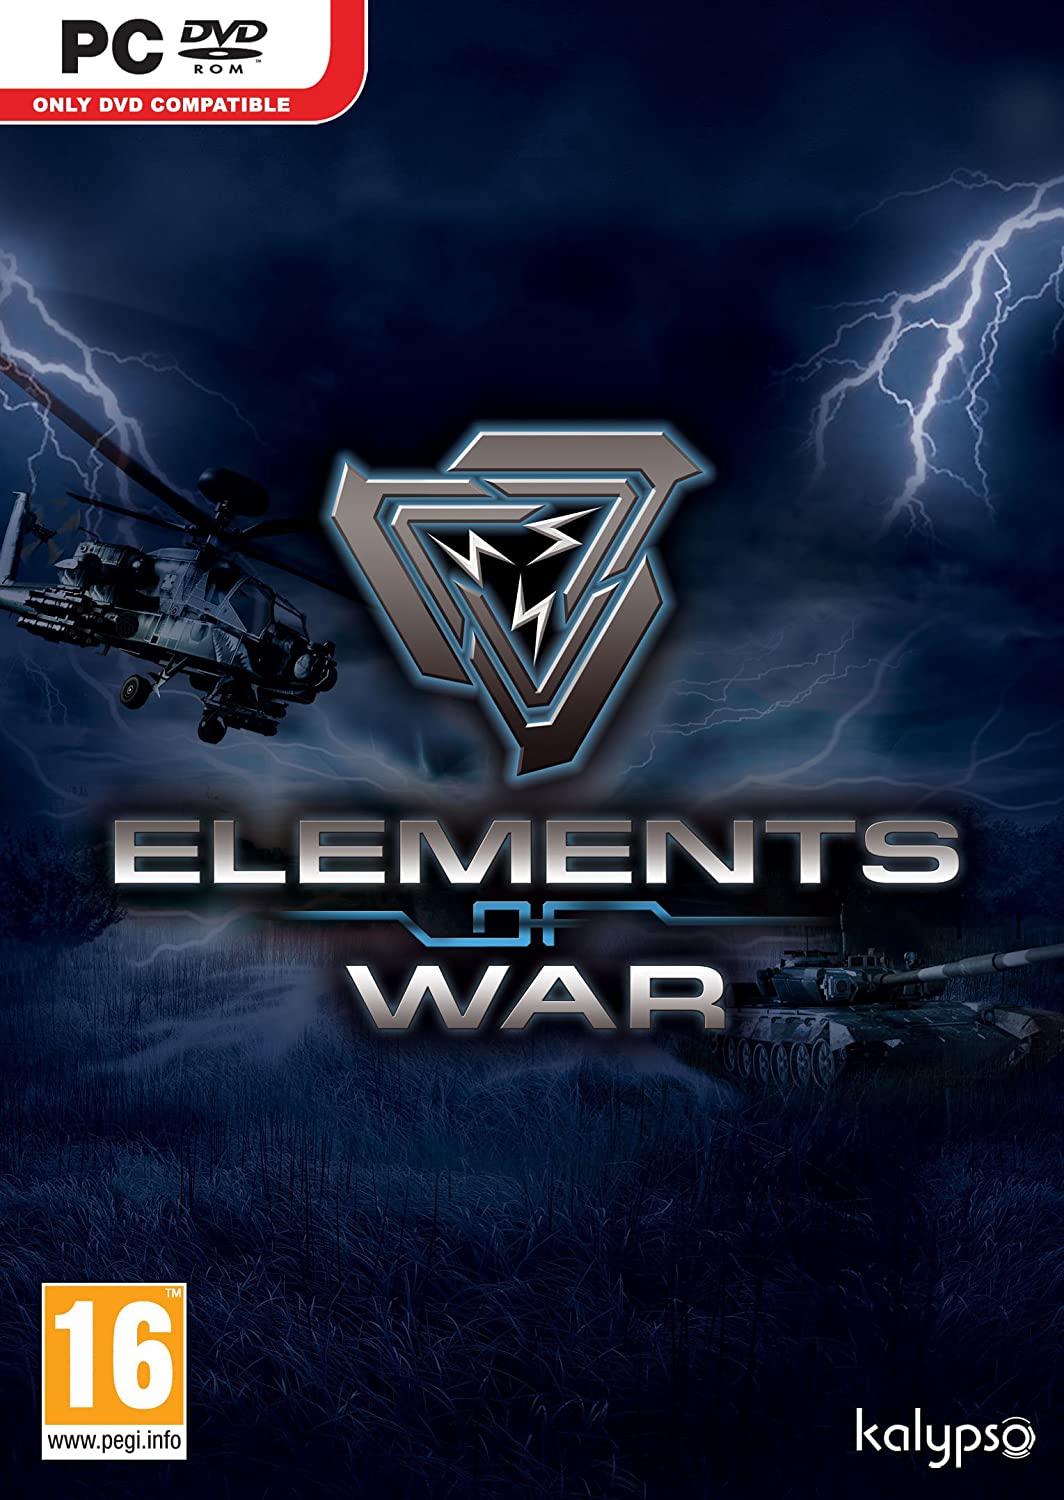 Elements of War (PC DVD)